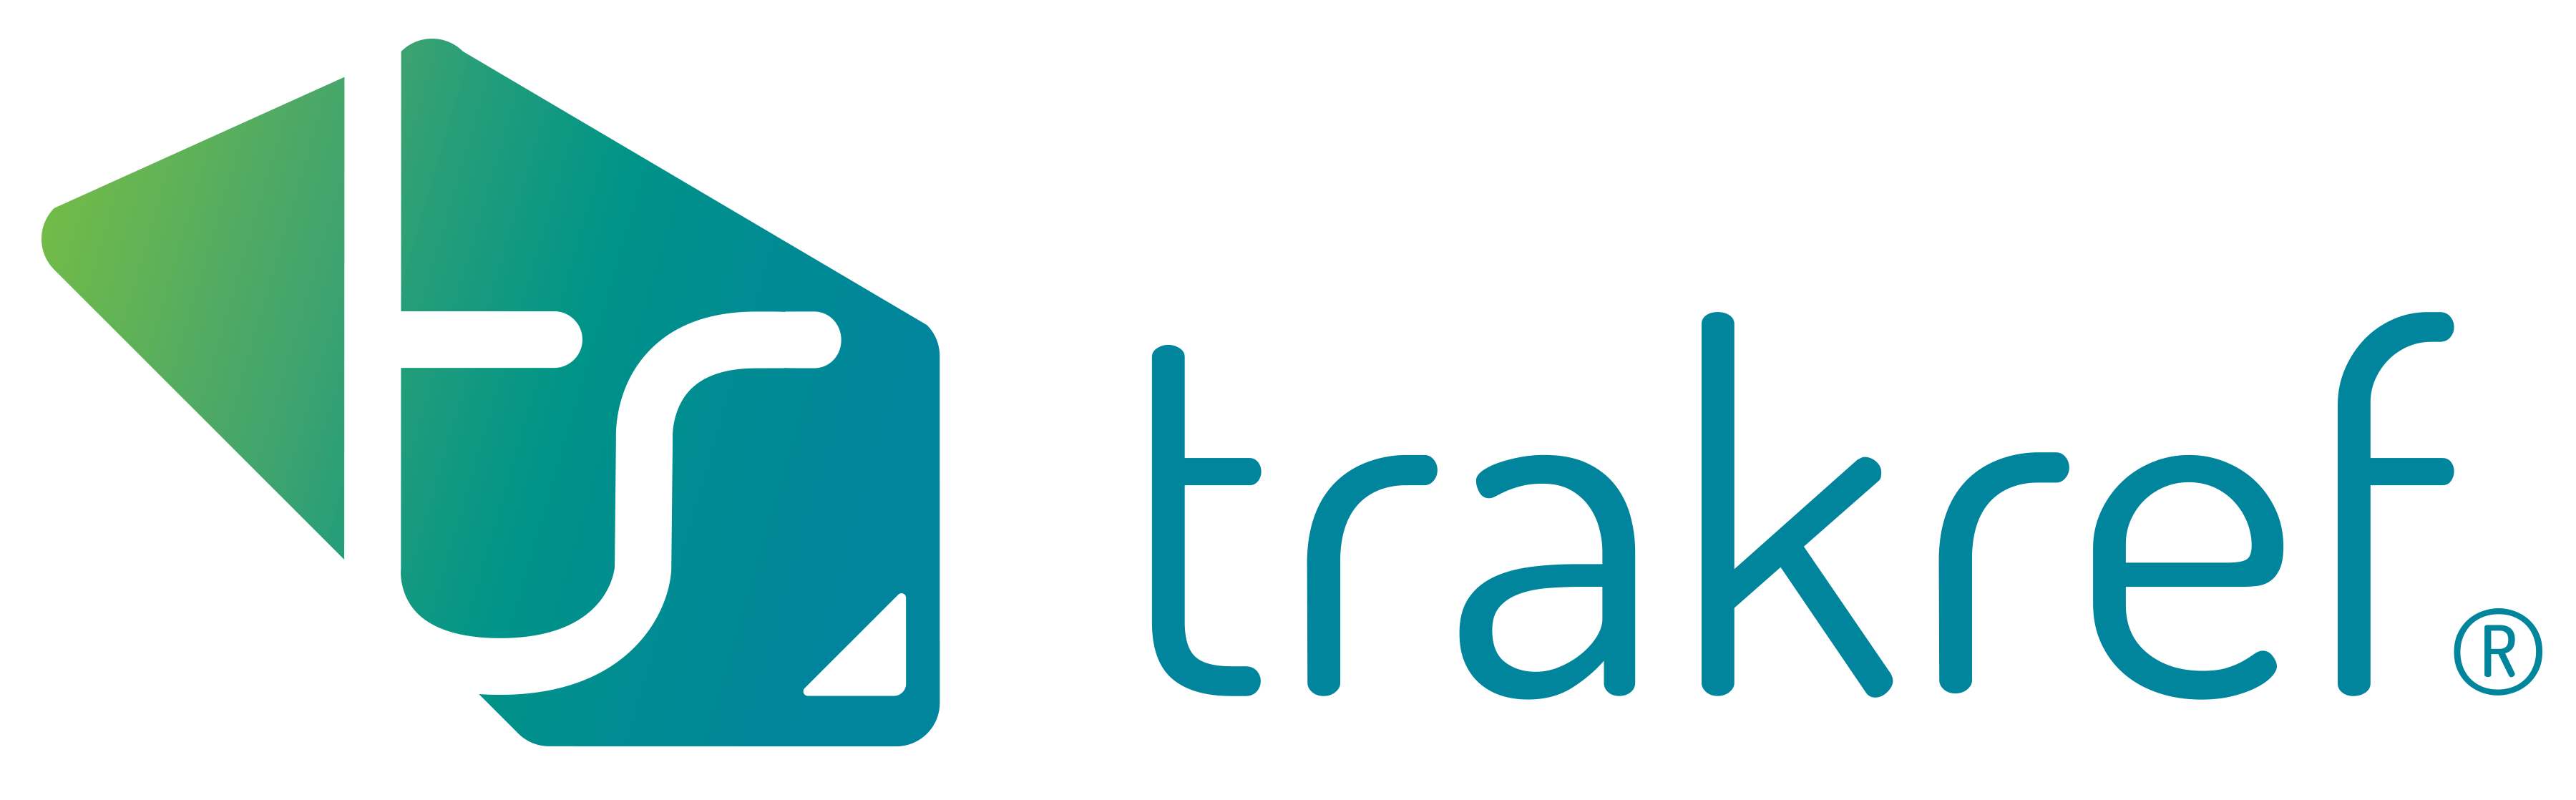 trakref-logo-rgb-XL-1.png